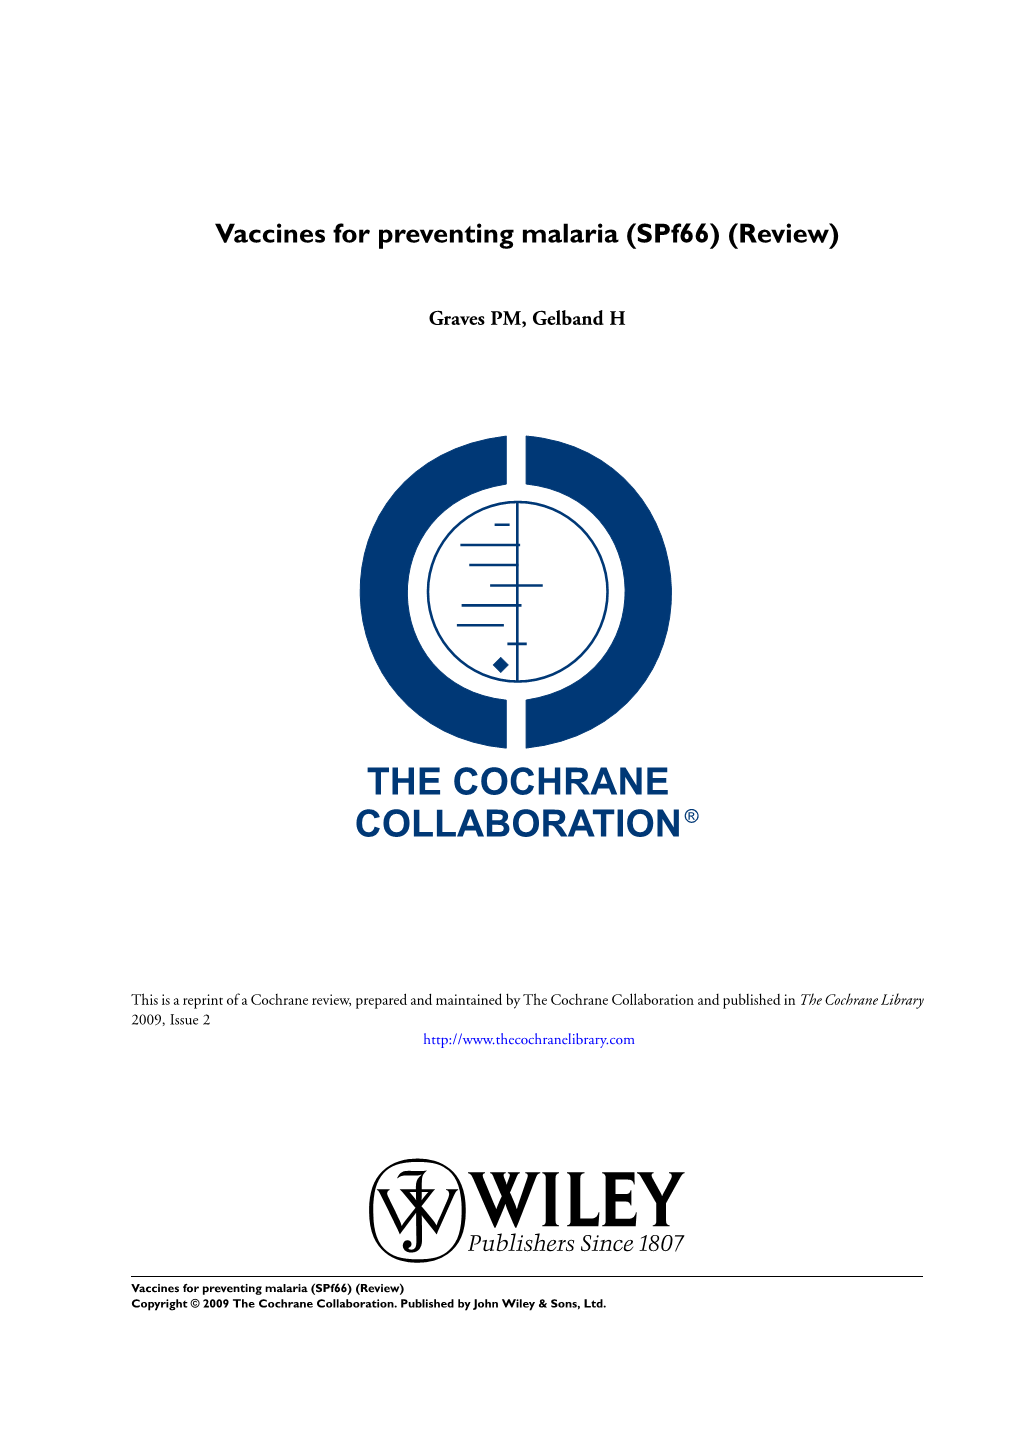 Vaccines for Preventing Malaria (Spf66) (Review)